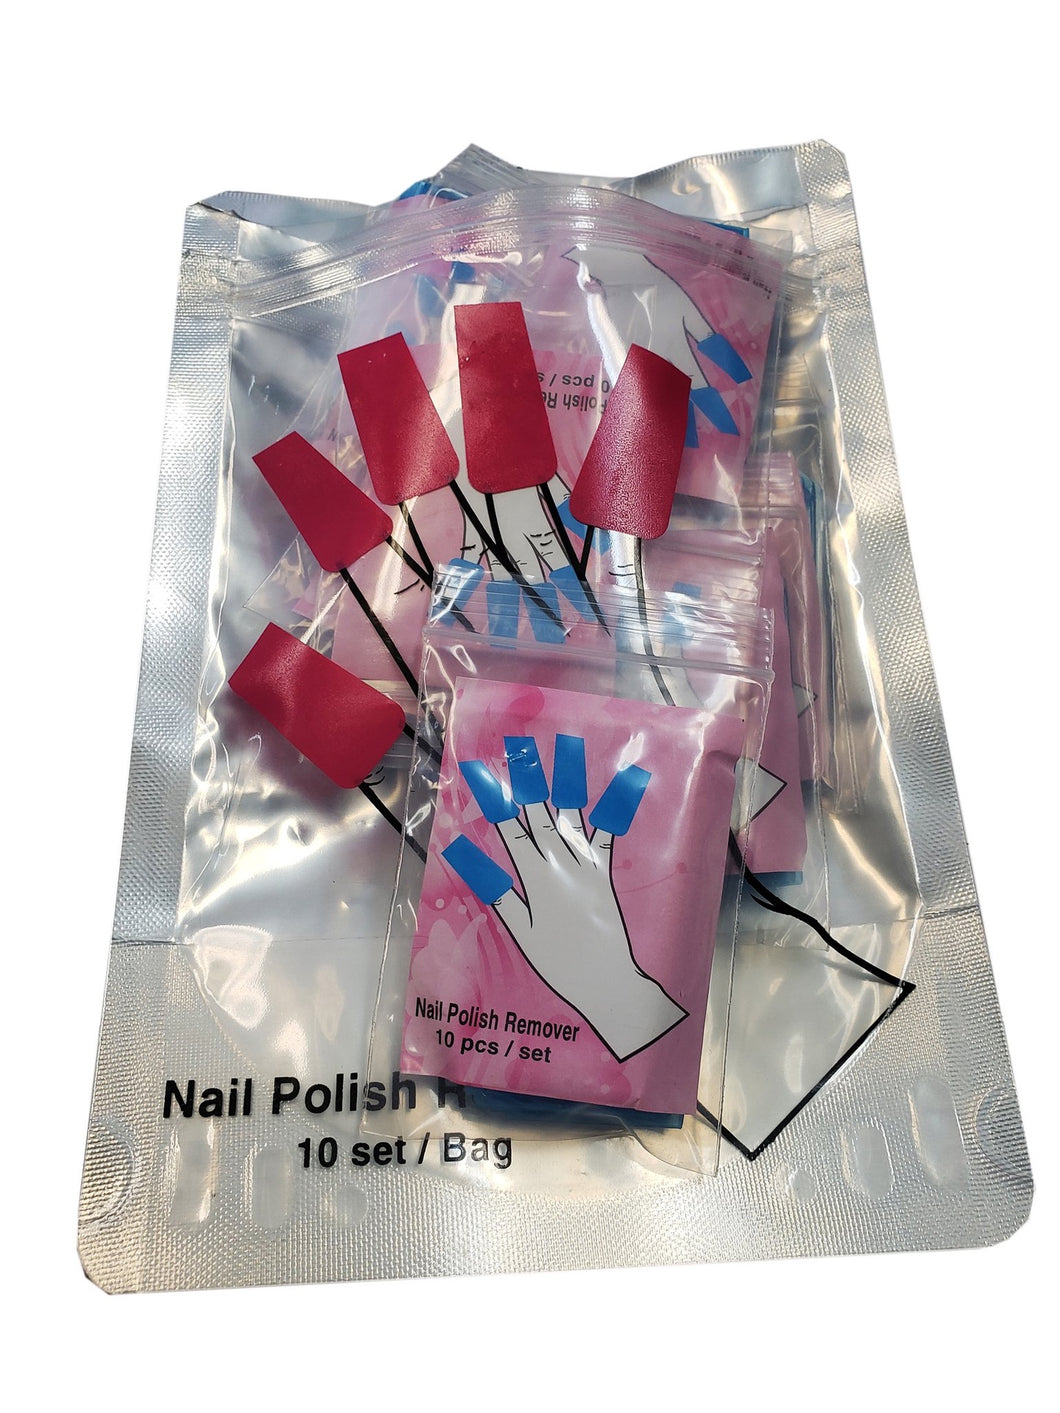 Nail Polish Remover pouch 10 Set / Bag